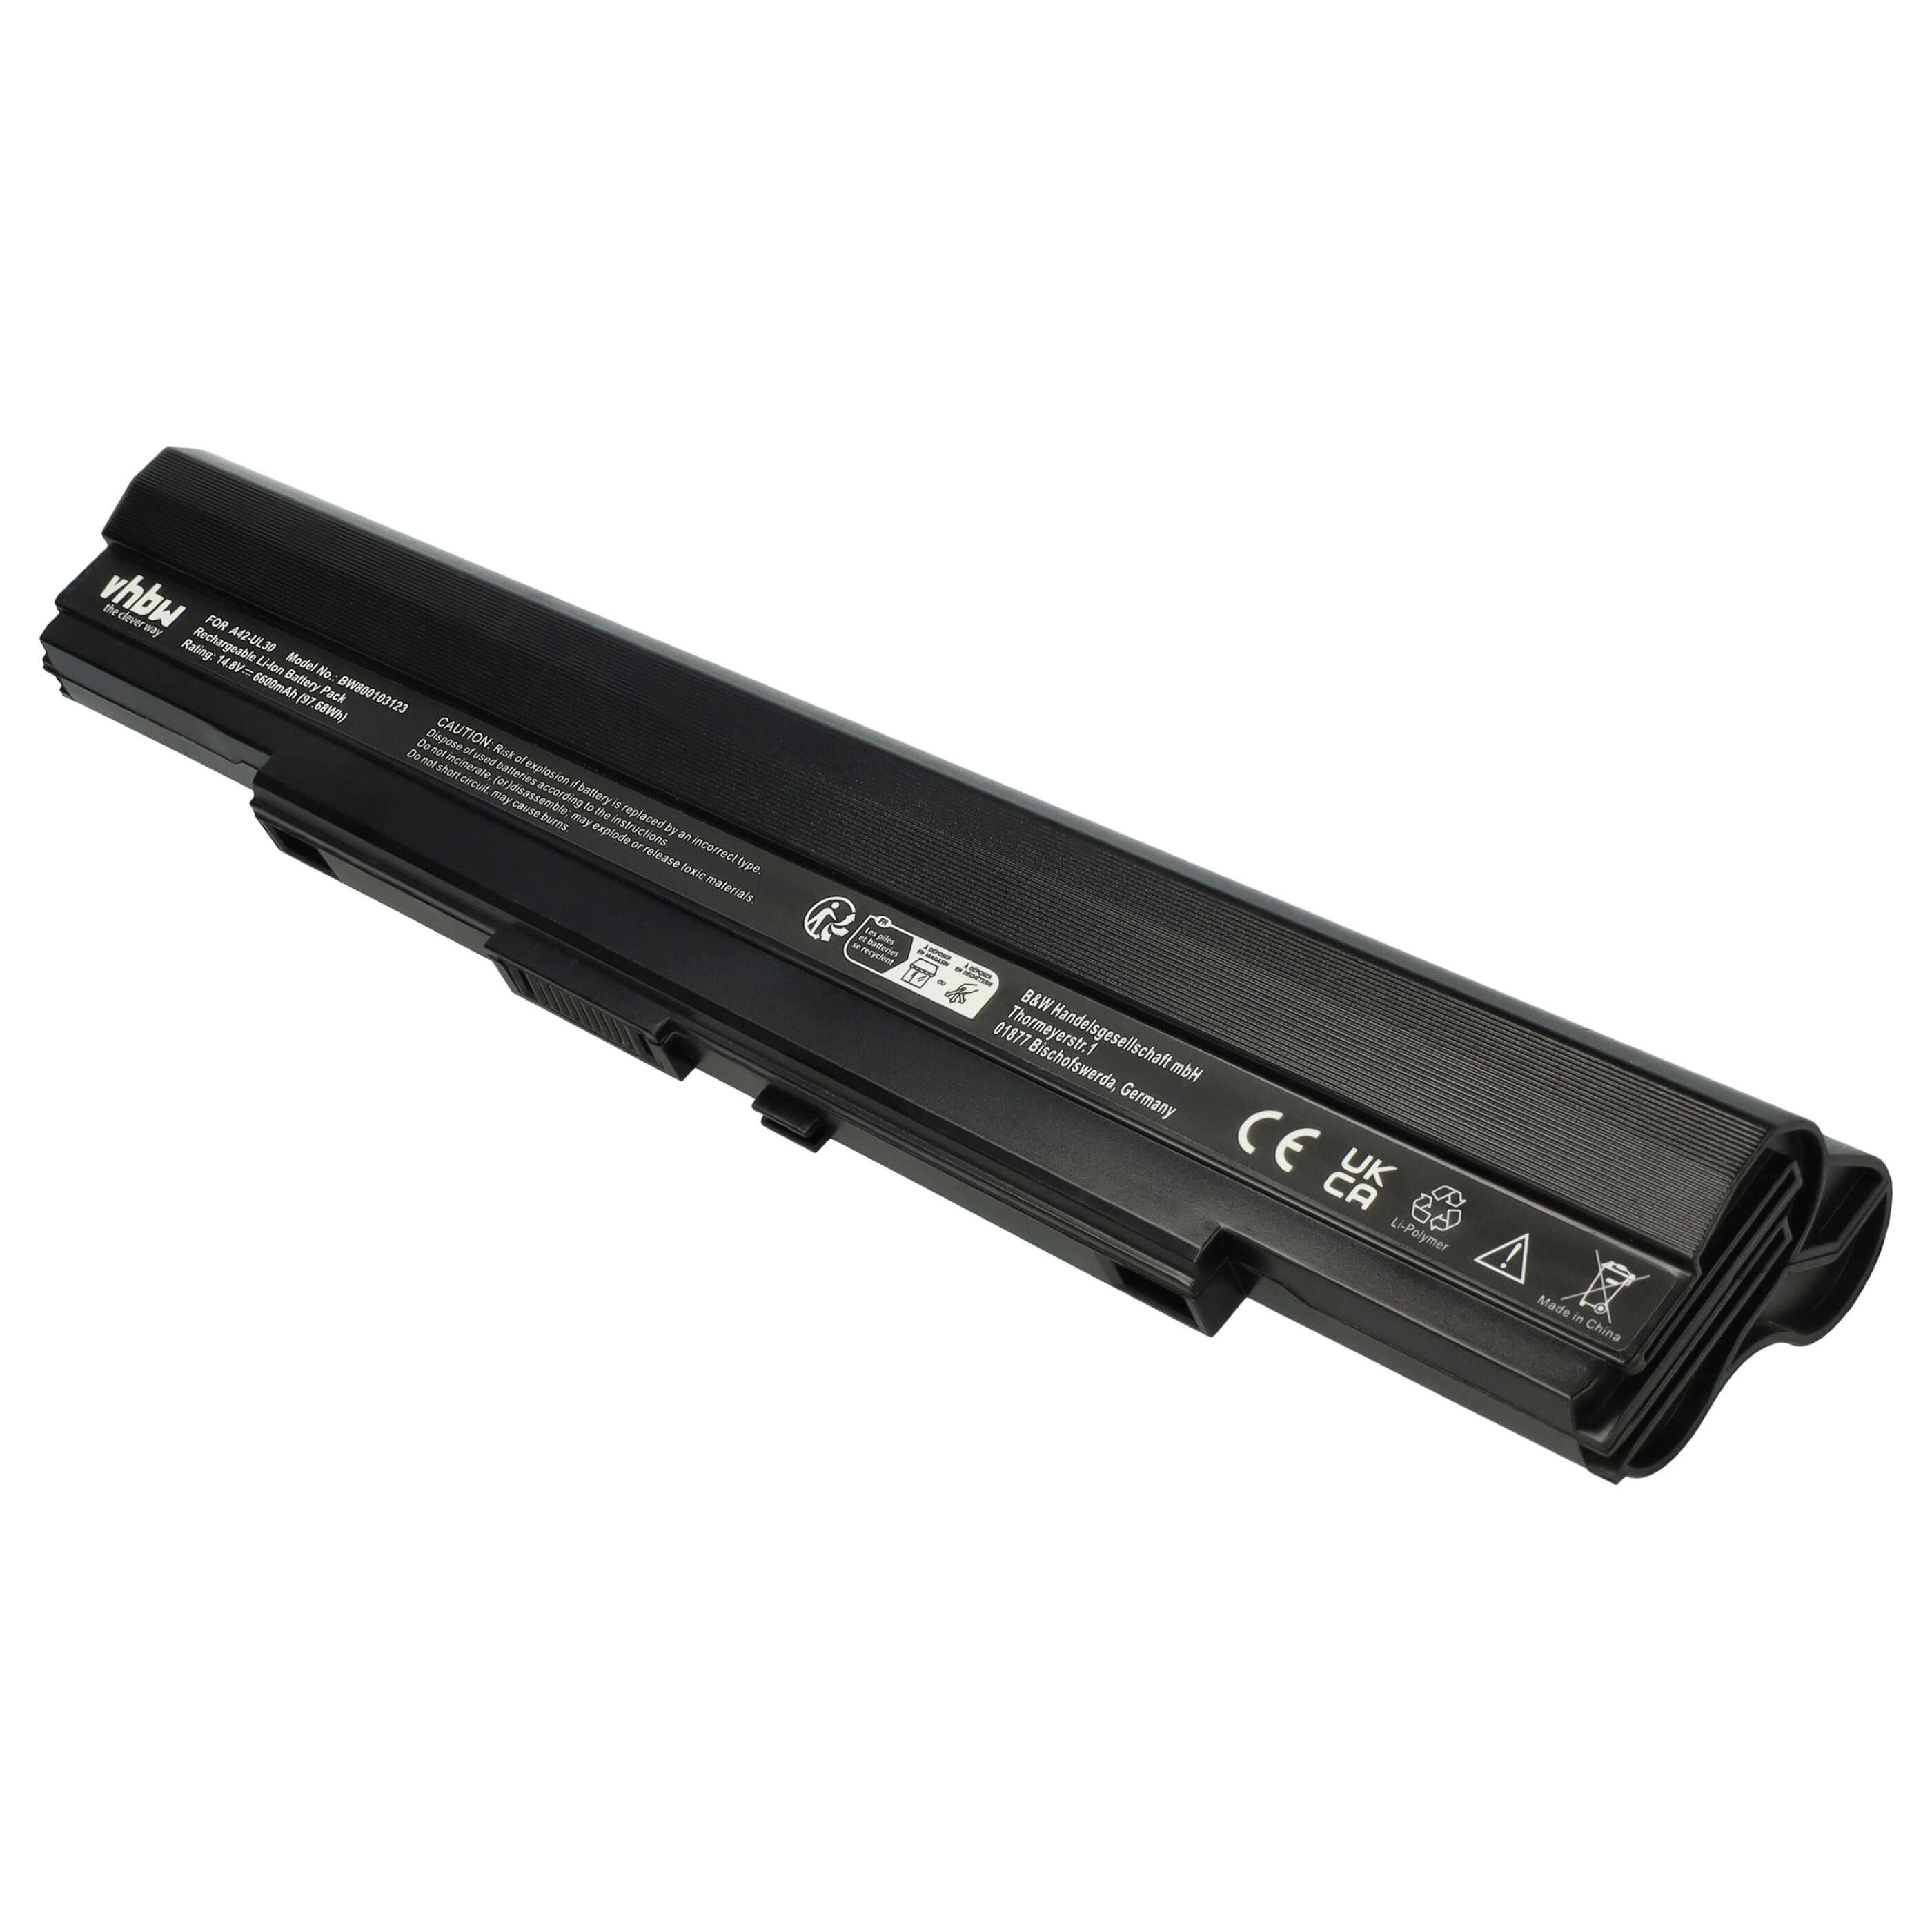 Batteria sostituisce Asus A42-UL50, A42-UL30, A42-UL80, A31-UL30 per notebook Asus - 6600mAh 14,8V Li-Ion nero